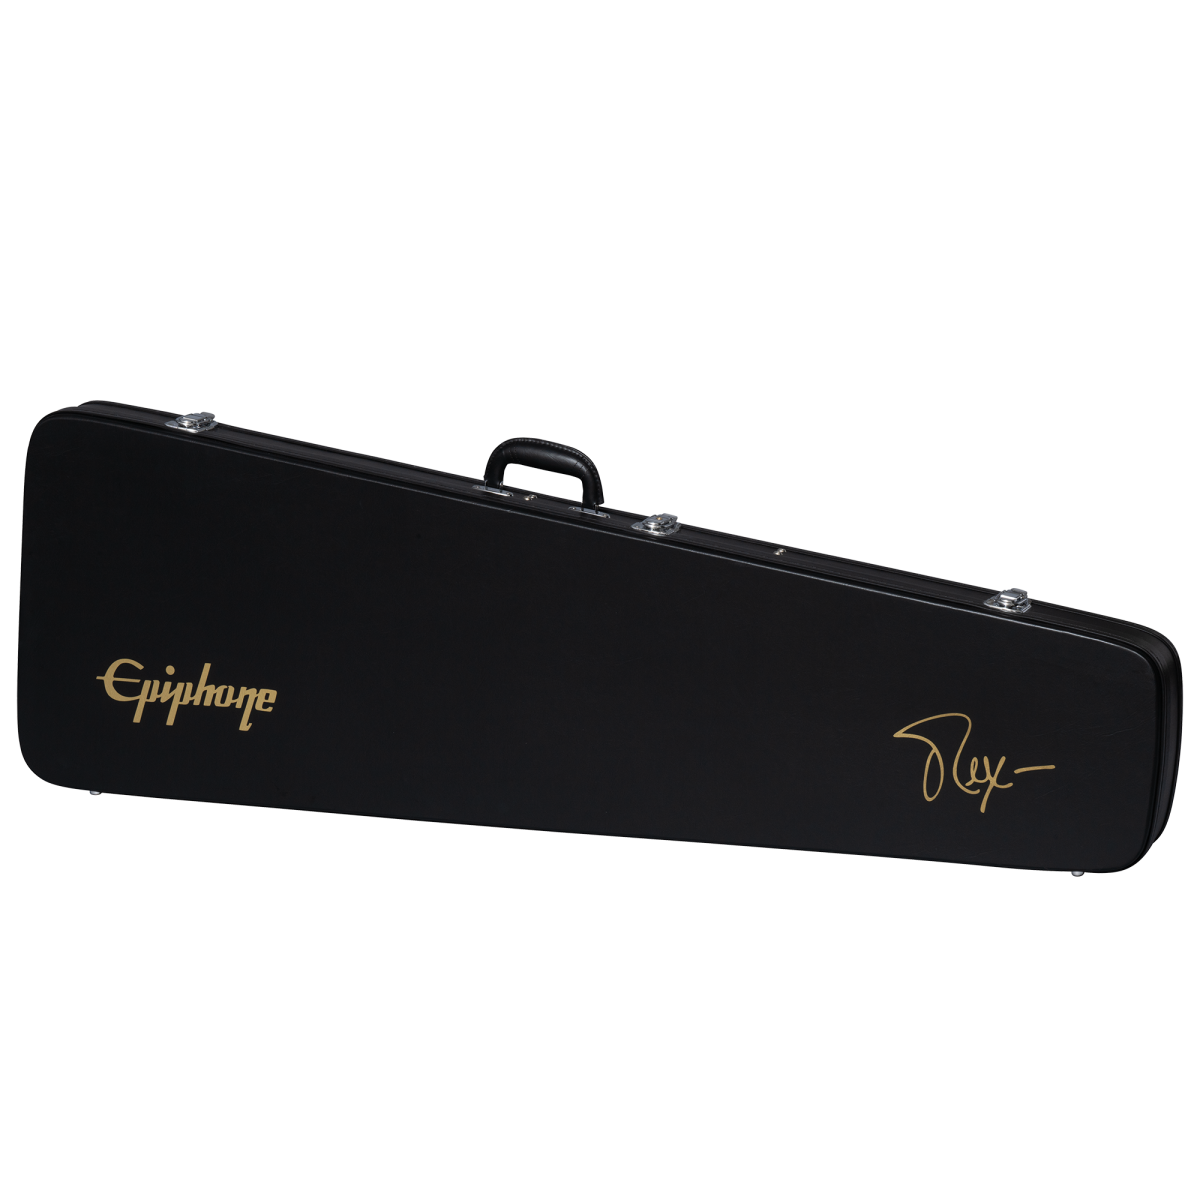 Epiphone Rex Brown Thunderbird Signature Bass with Hardshell Case - Ebony EIGTB4RBEBGH